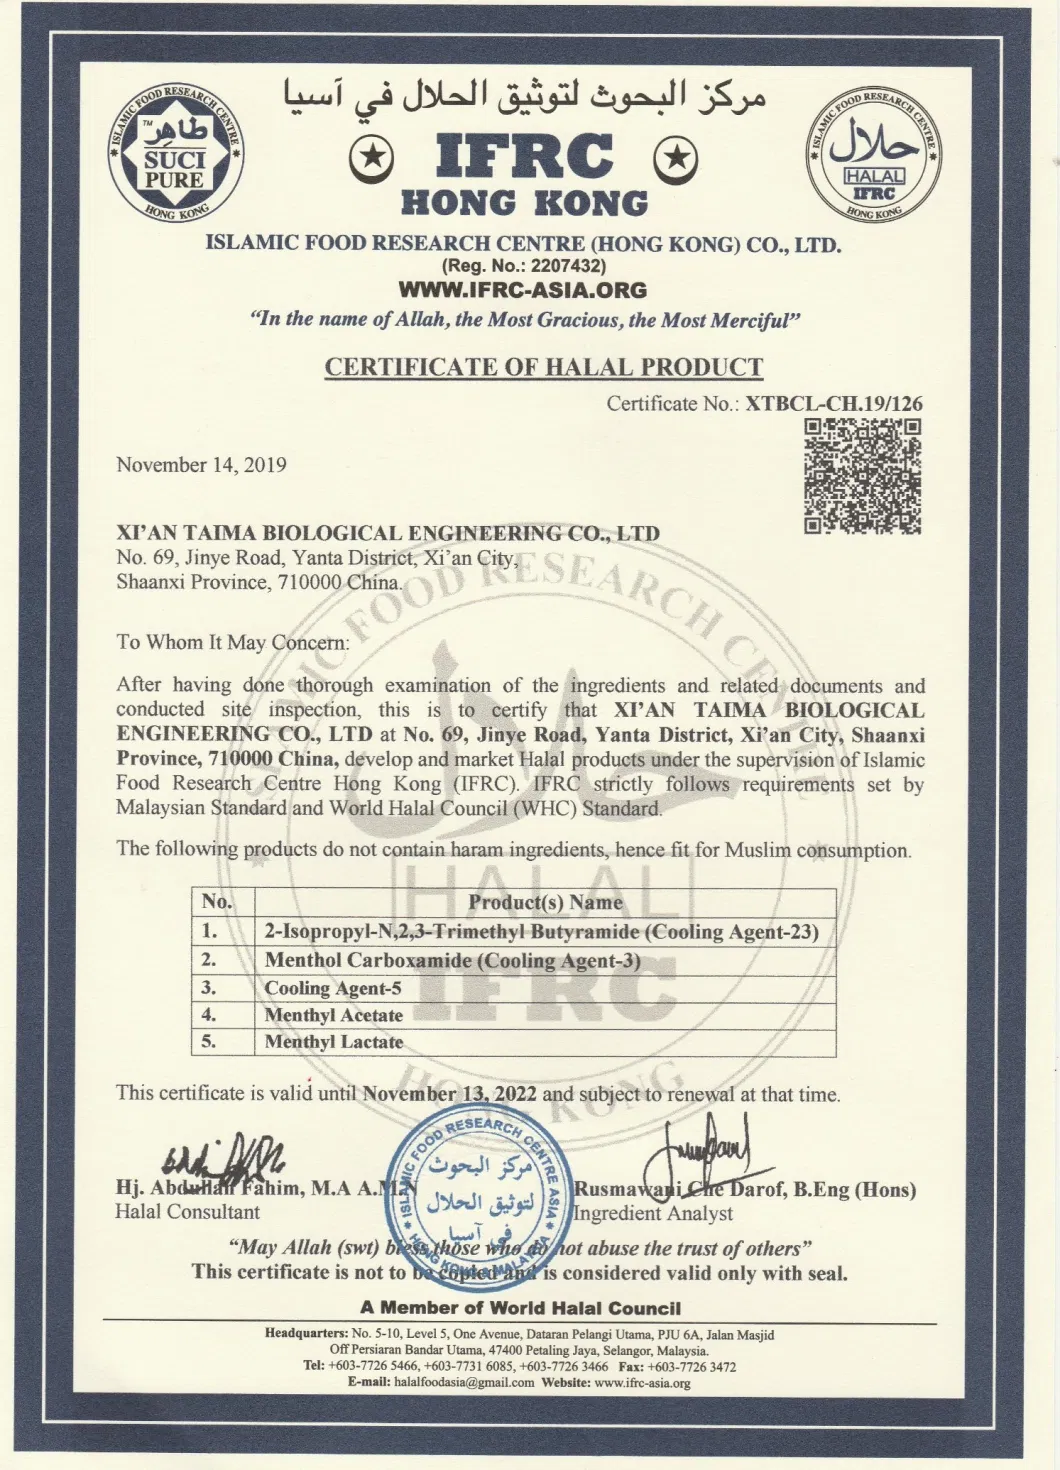 Menthol Ws-23 Cooling Agent Powder Food Grade CAS 51115-67-4 FDA Certificate